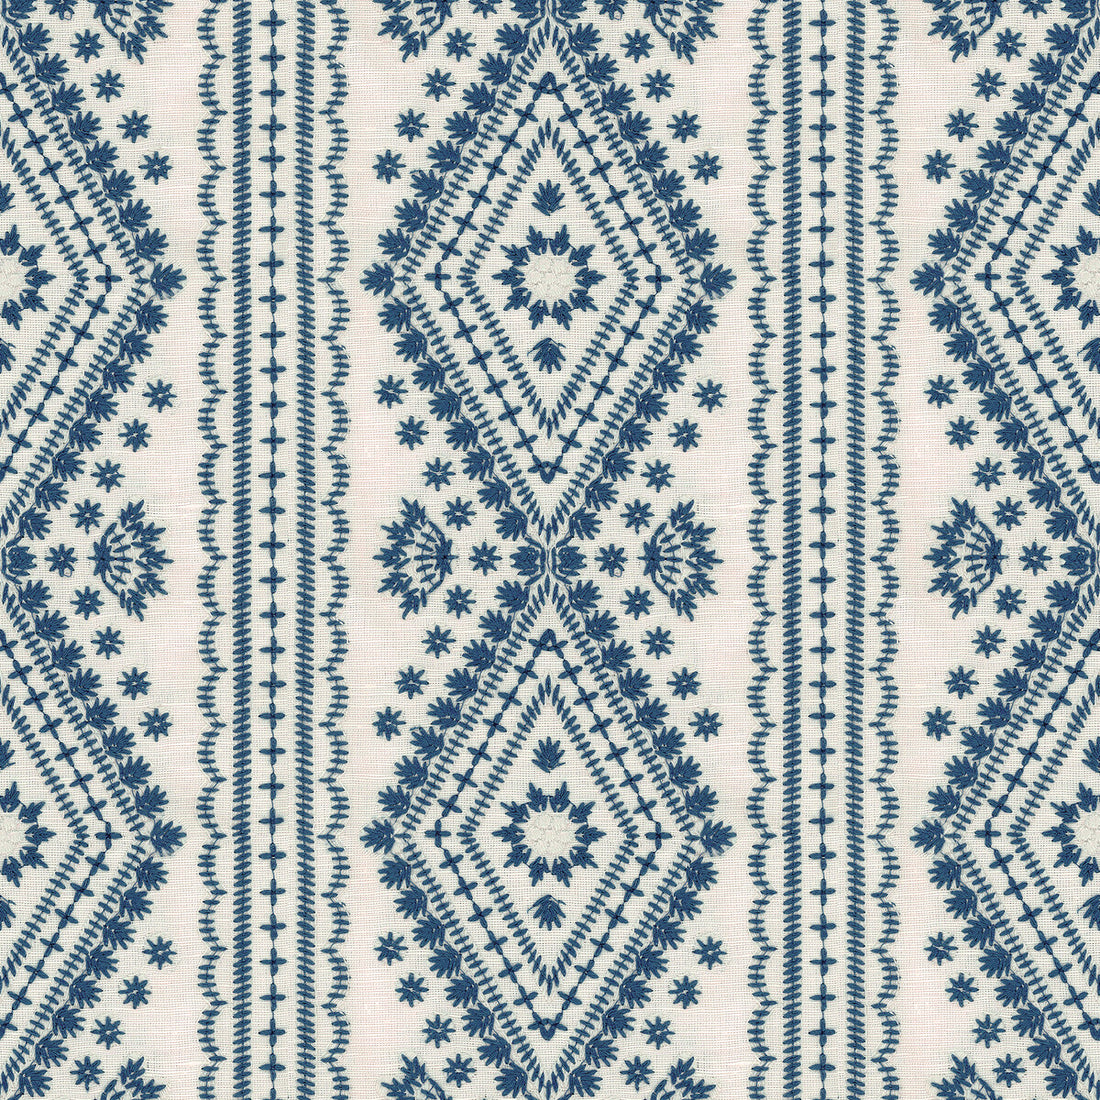 Lucknow fabric in blue color - pattern 2017104.5.0 - by Lee Jofa in the Oscar De La Renta III collection